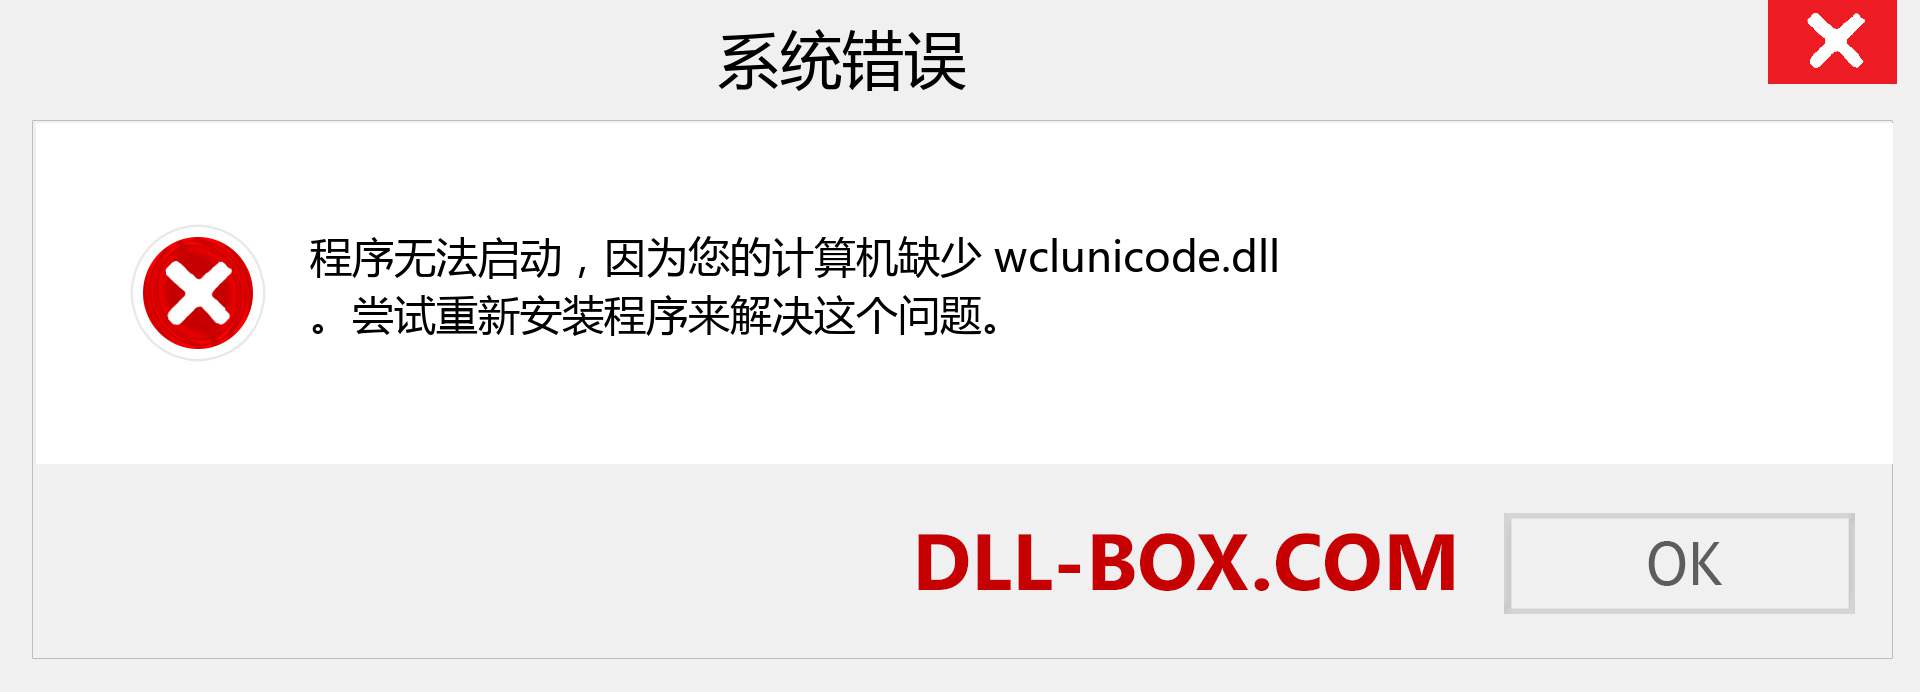 wclunicode.dll 文件丢失？。 适用于 Windows 7、8、10 的下载 - 修复 Windows、照片、图像上的 wclunicode dll 丢失错误